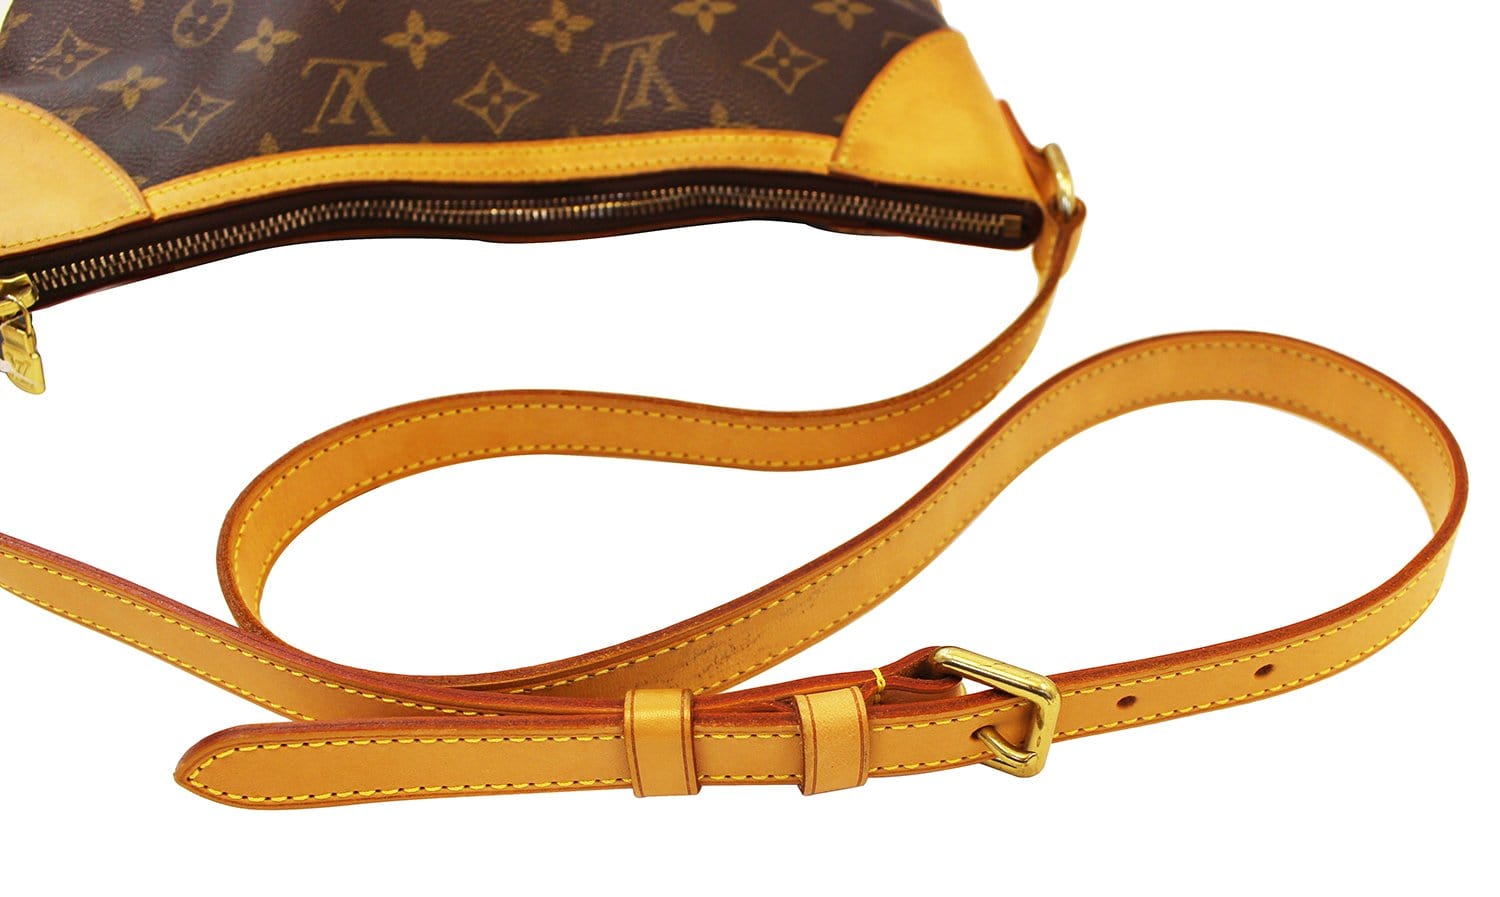 Odeon MM Monogram – Keeks Designer Handbags